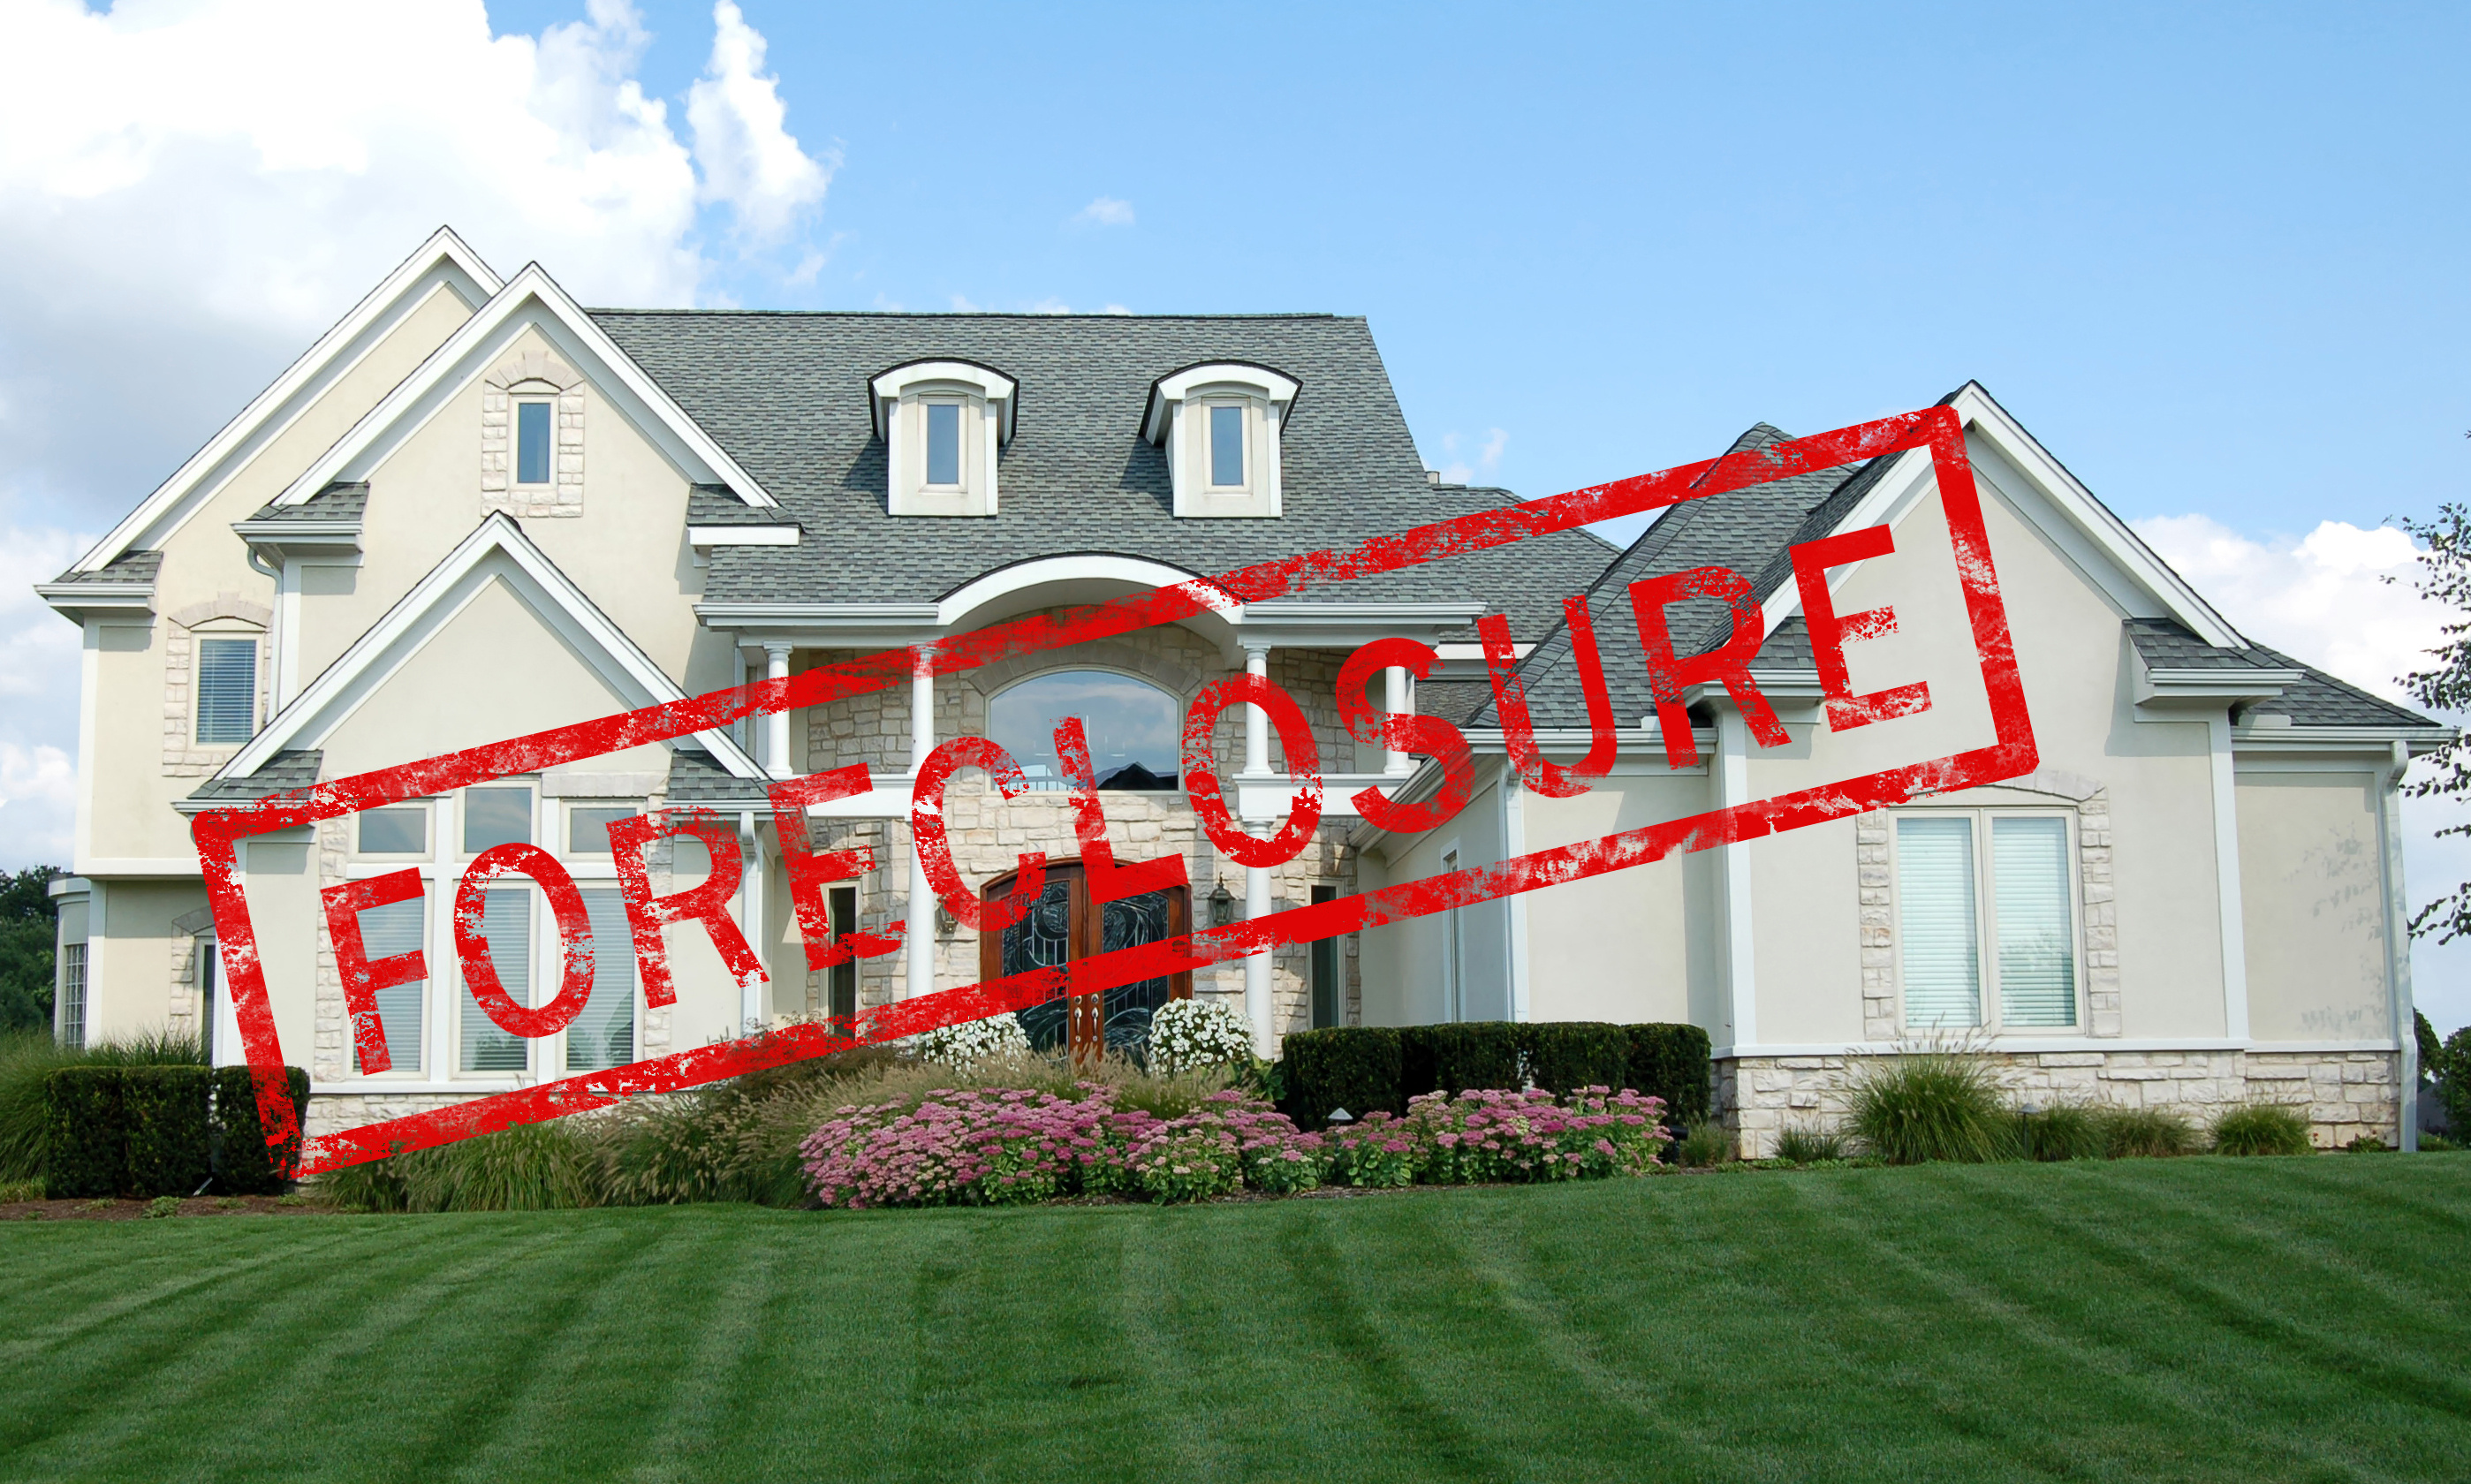 Call A. M. Appraisals when you need appraisals regarding Lexington foreclosures